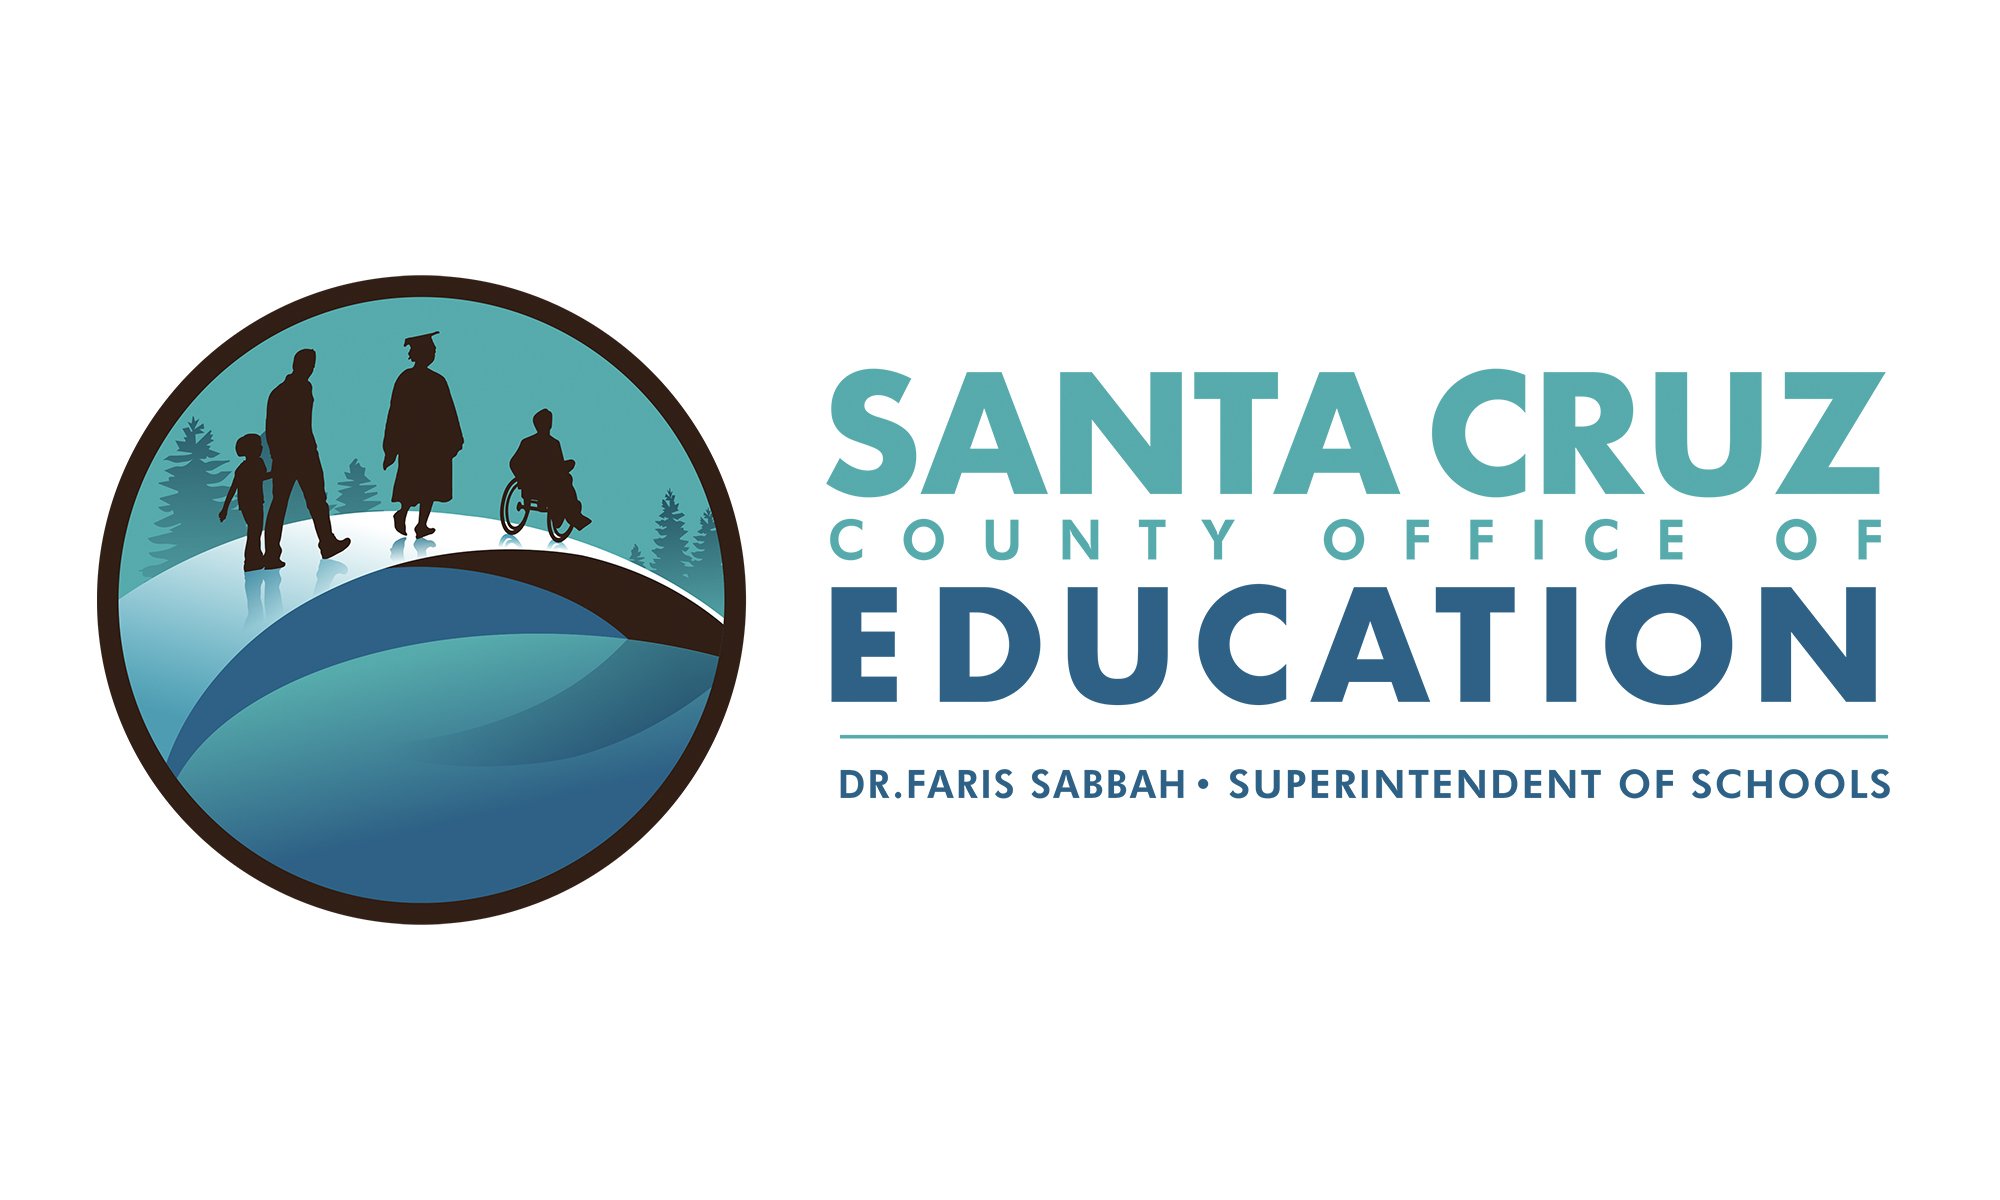 Santa Cruz County Office of Education